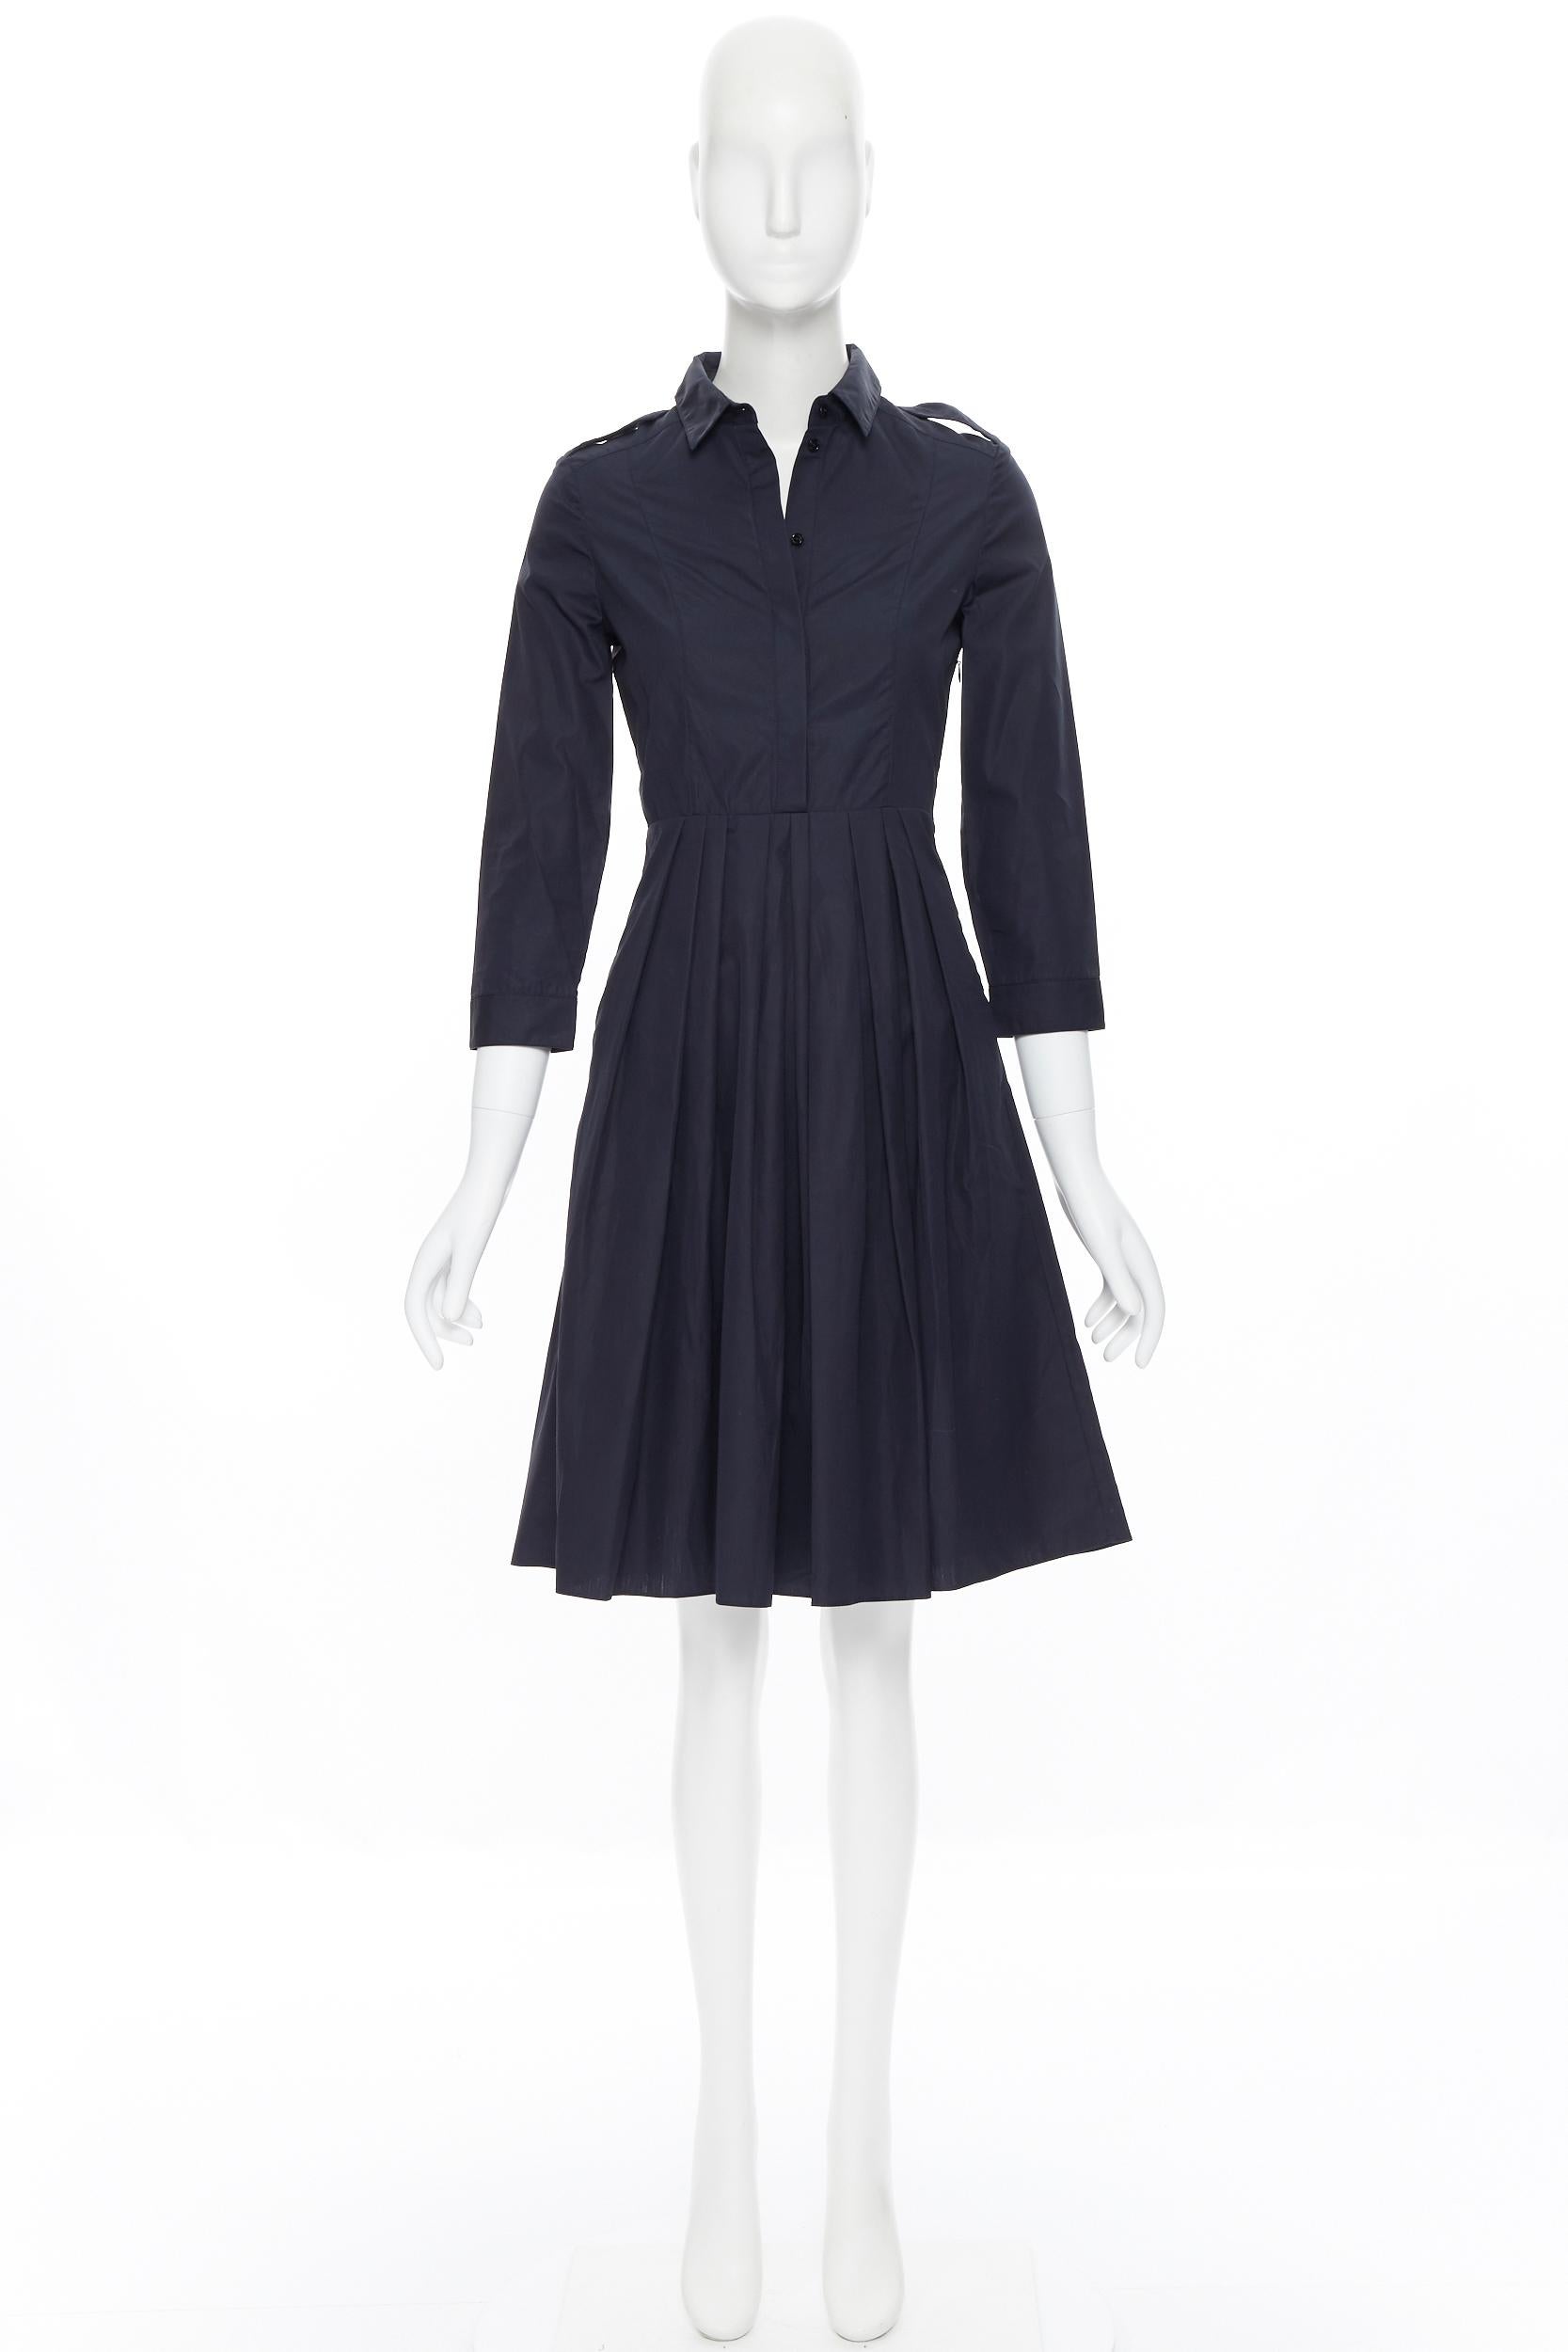 BURBERRY navy blue cotton pleated skirt safari detail flared dress UK4 XS 3